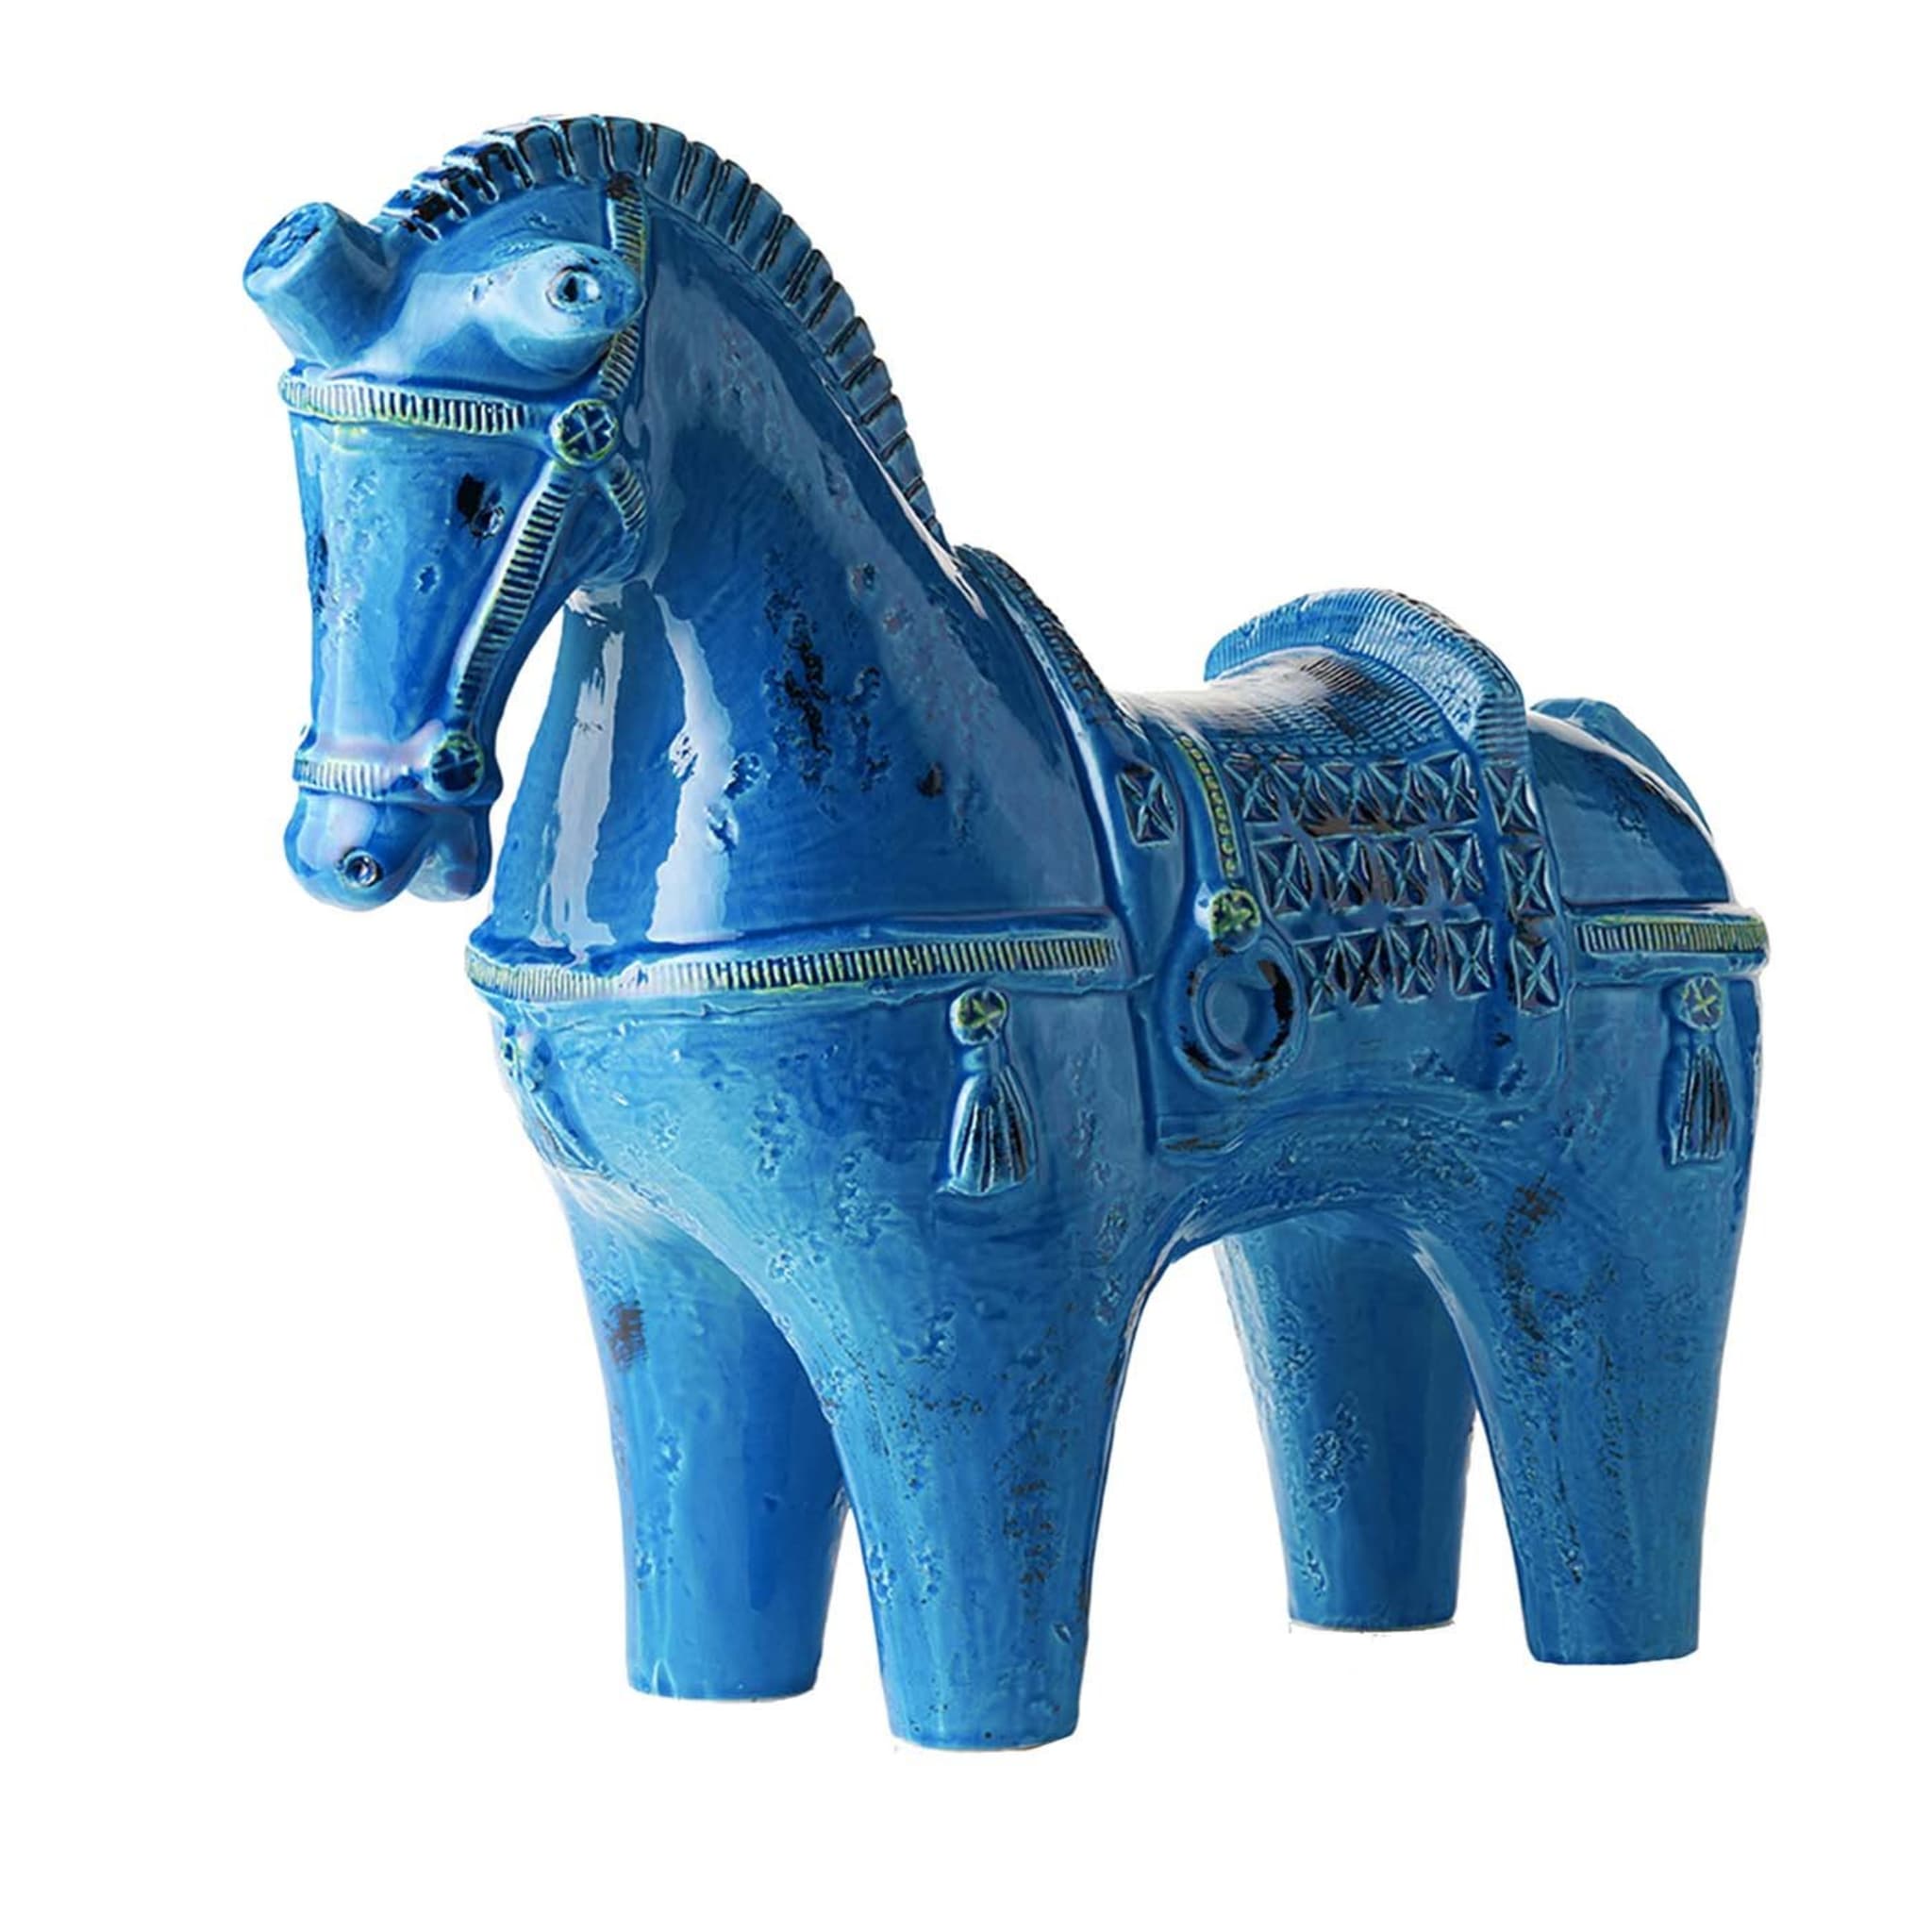 Rimini Blu Standing Horse Figurine by Aldo Londi - Main view